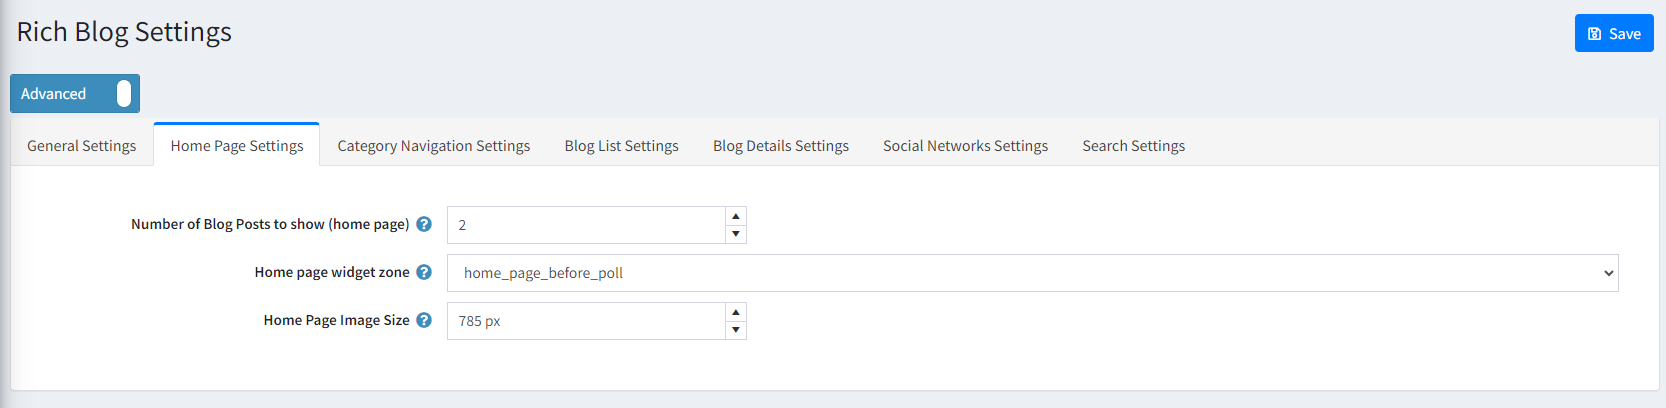 Pioneer Richblog Homepage settings administration